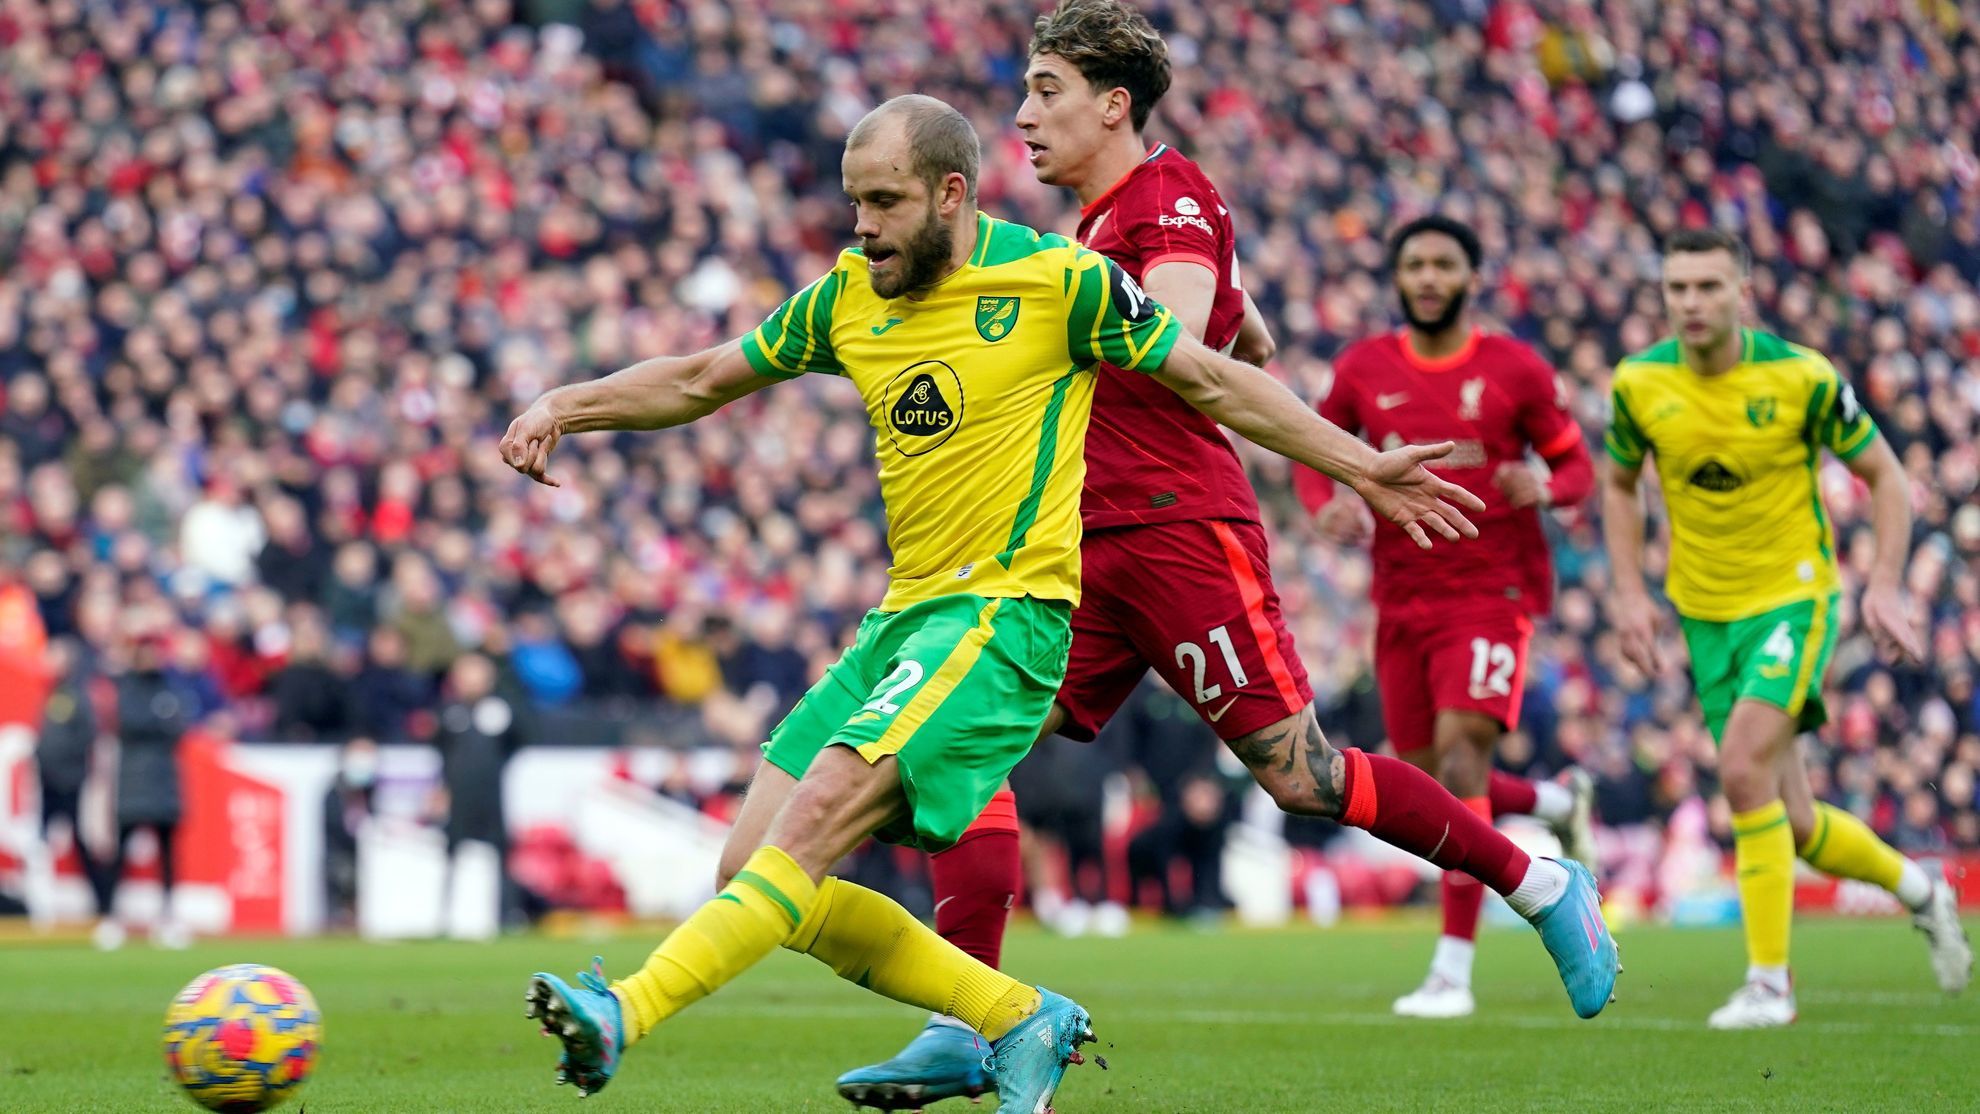 Liverpool vs Norwich in the FA Cup fifth round